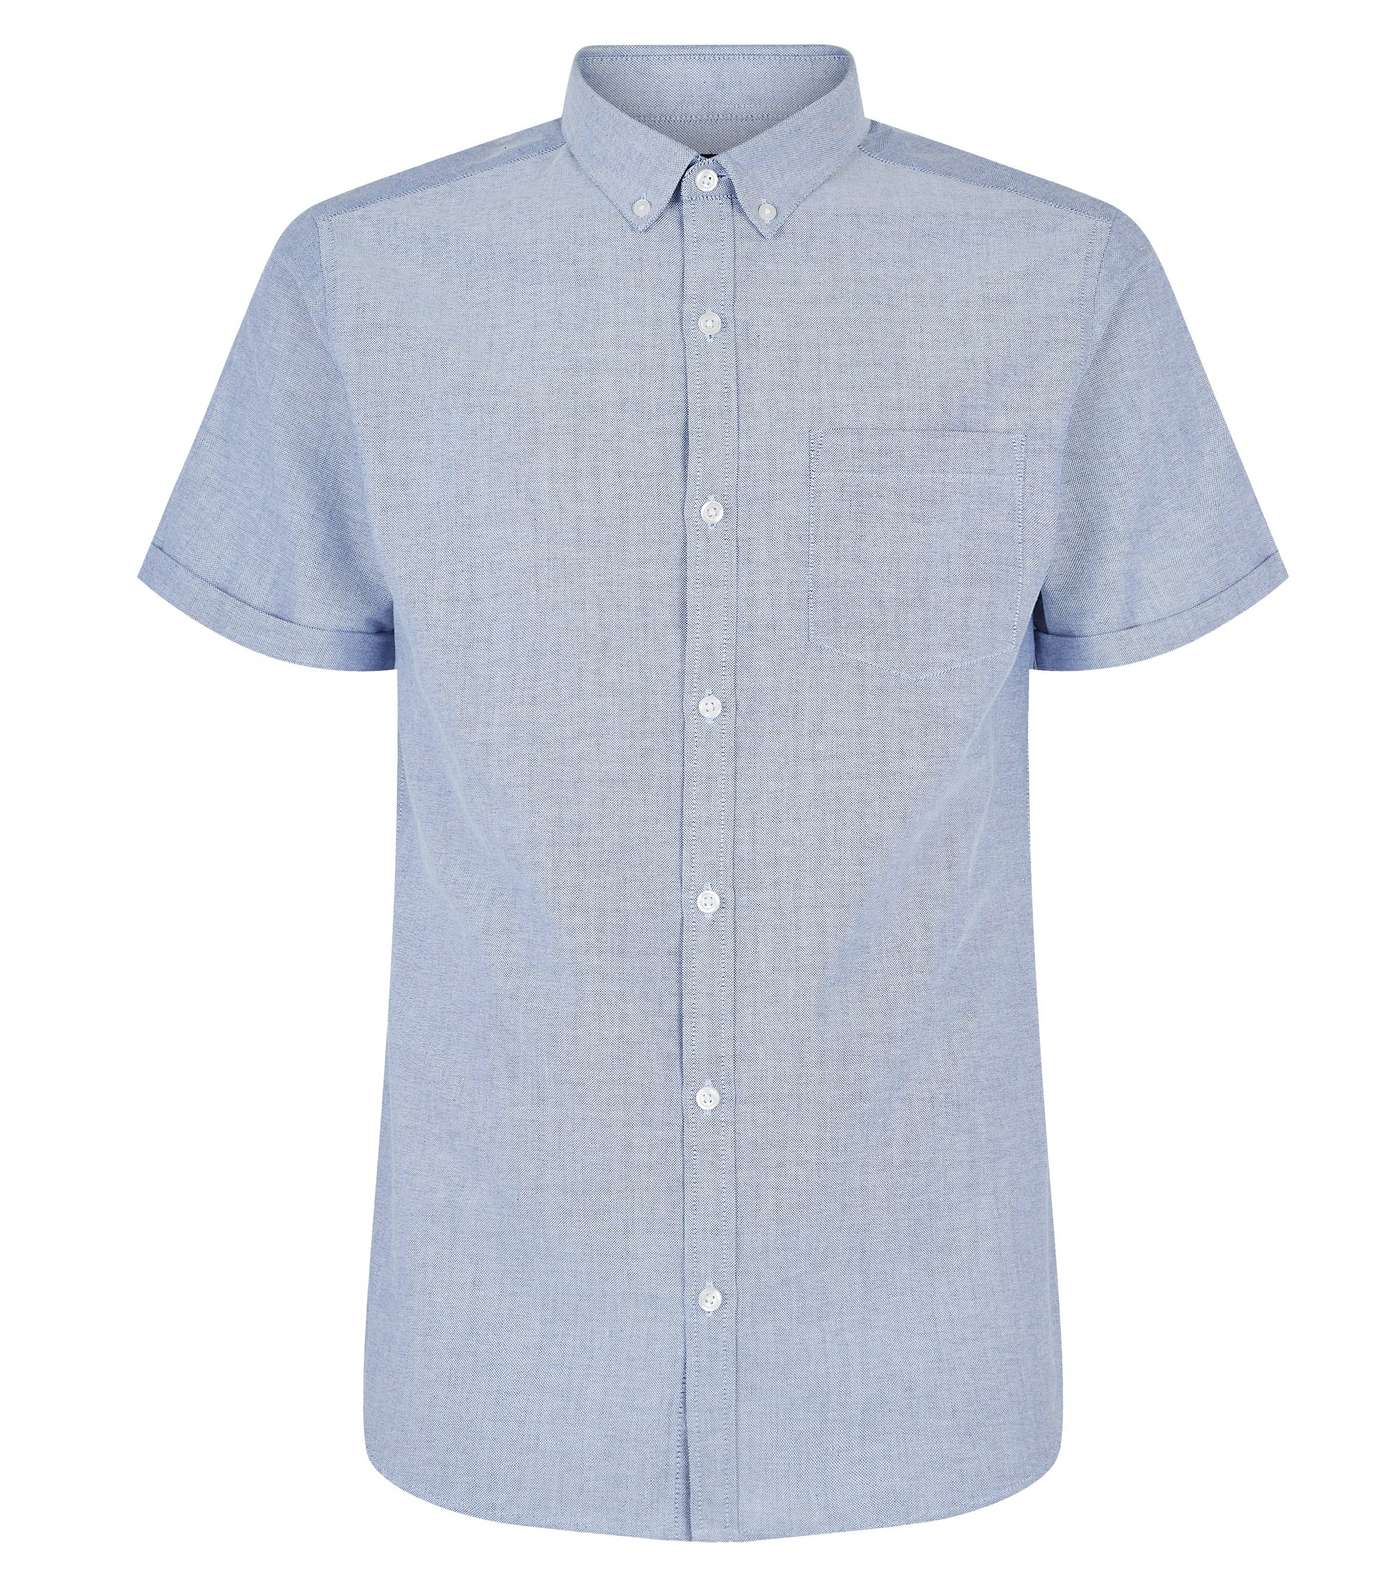 Pale Blue Short Sleeve Cotton Oxford Shirt Image 5